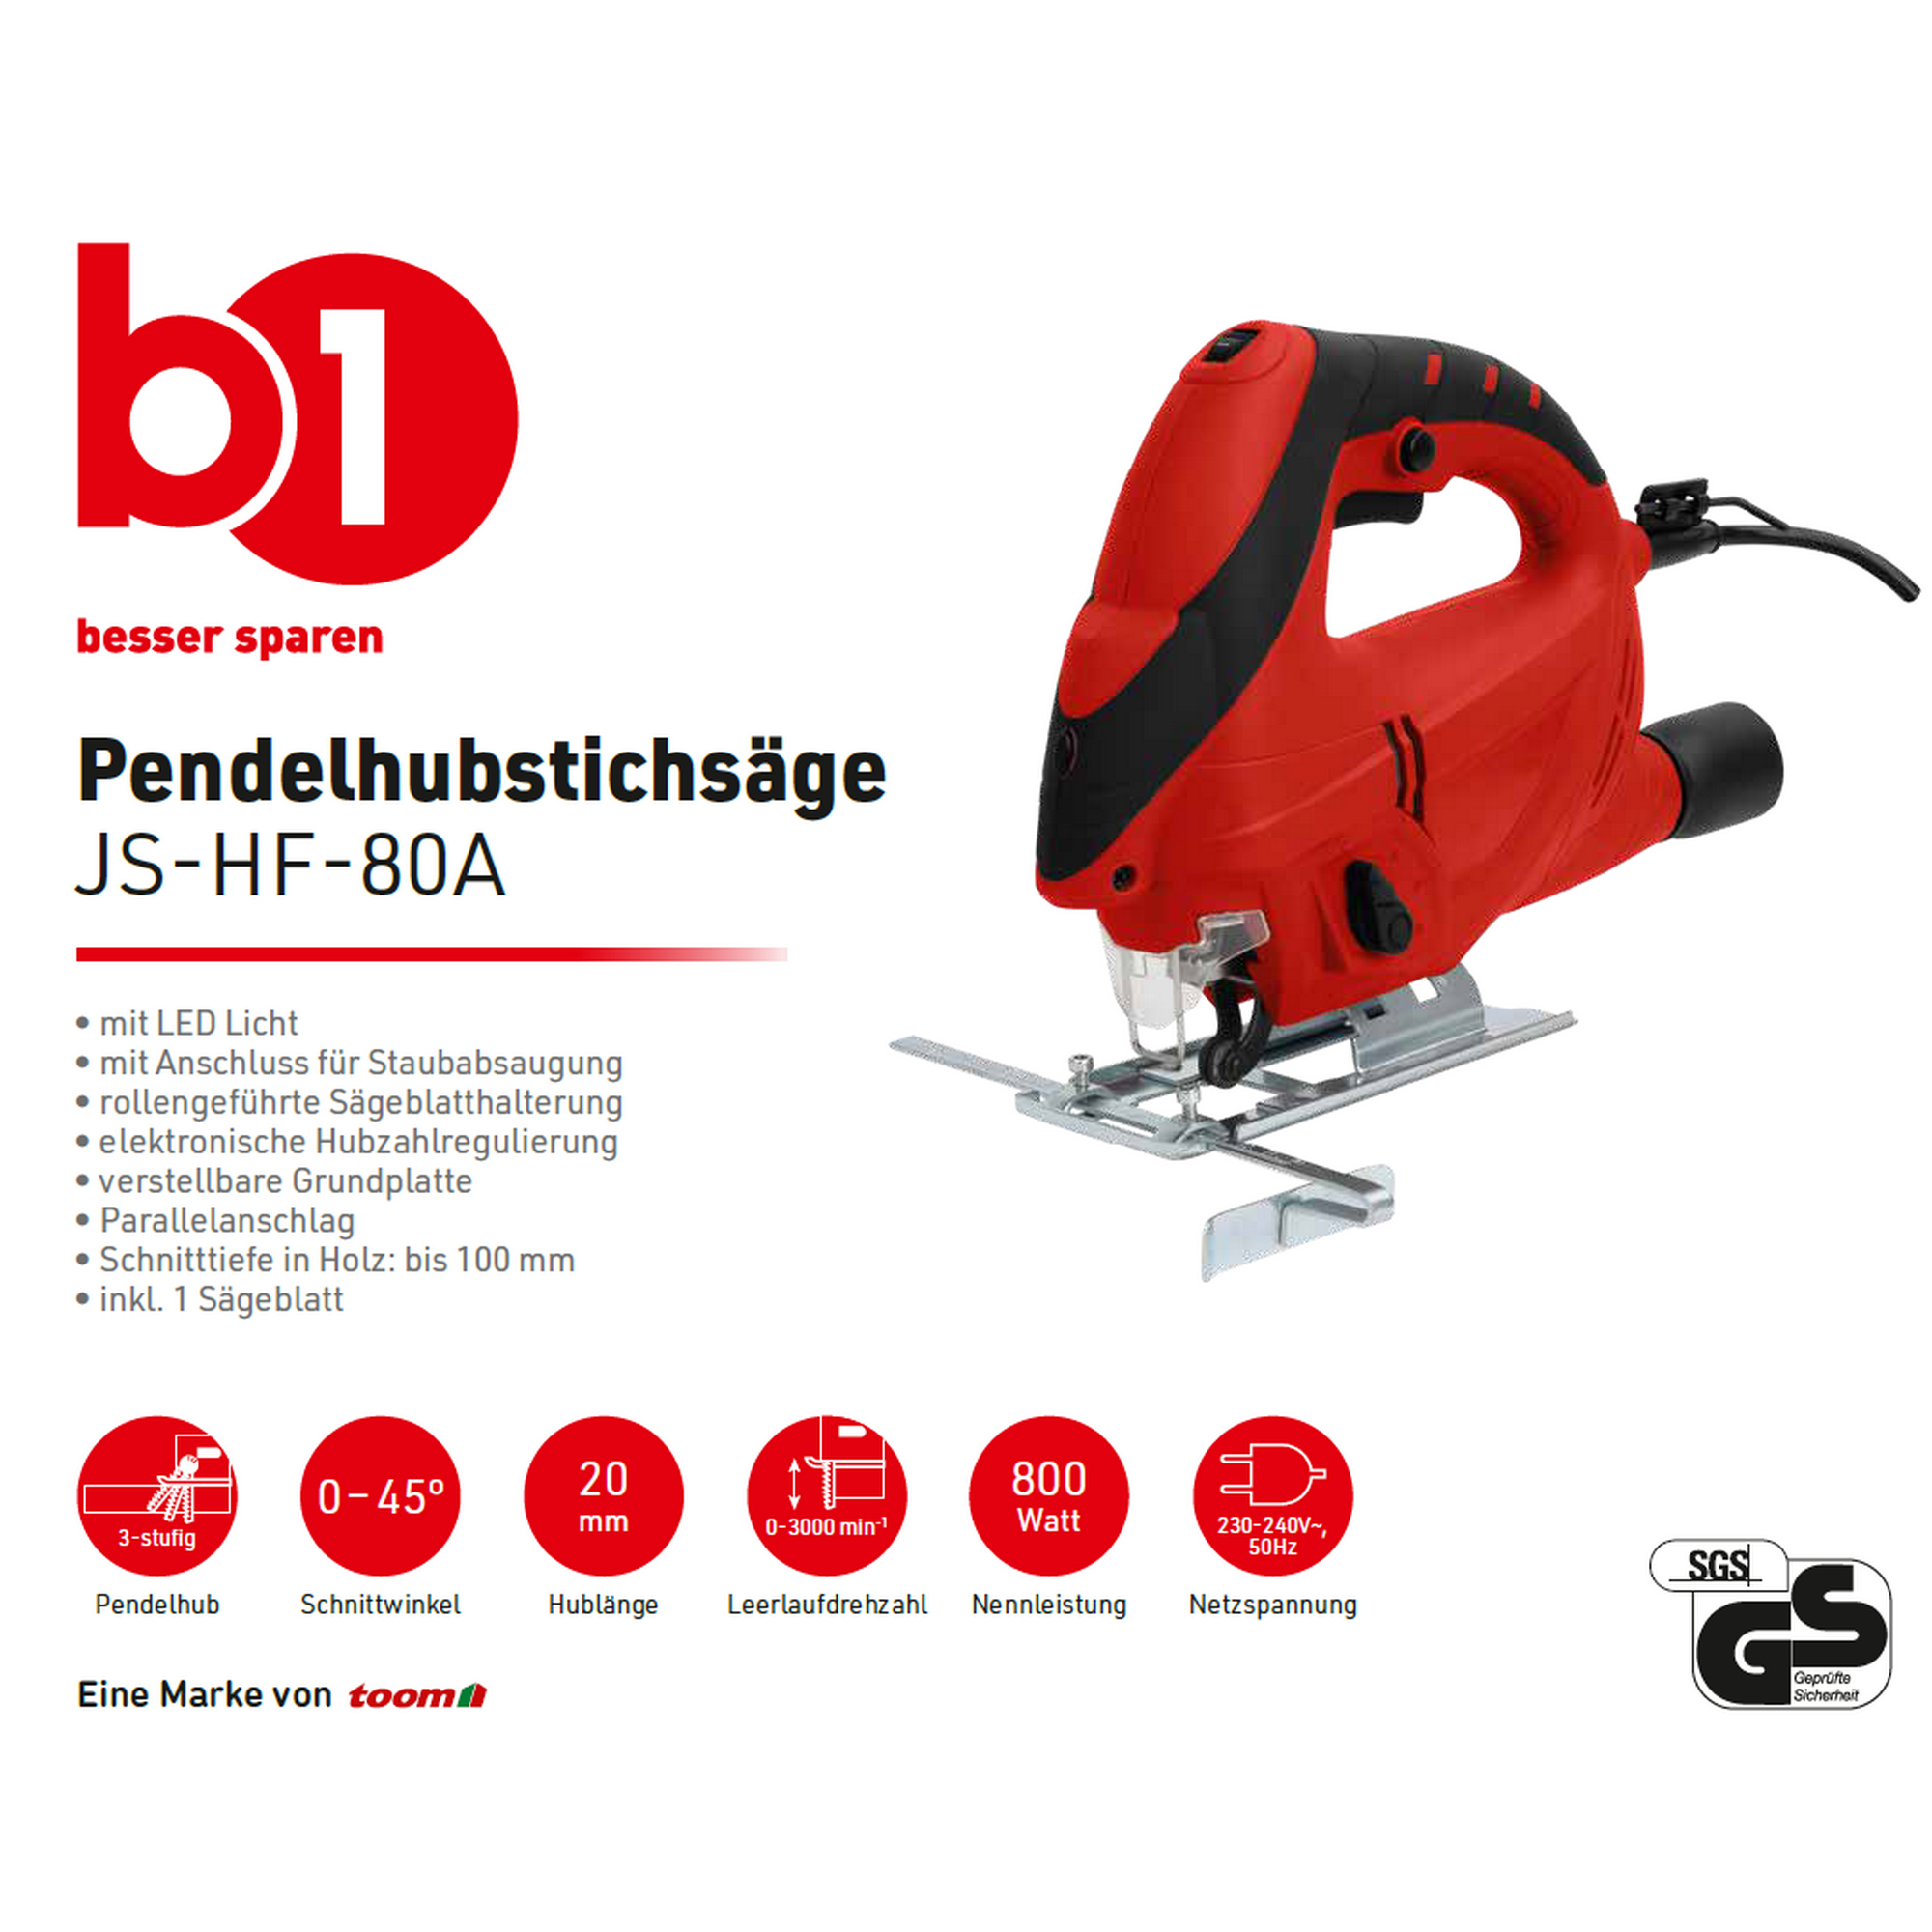 Pendelhubstichsäge 'JS-HF-80A' 800 W + product picture